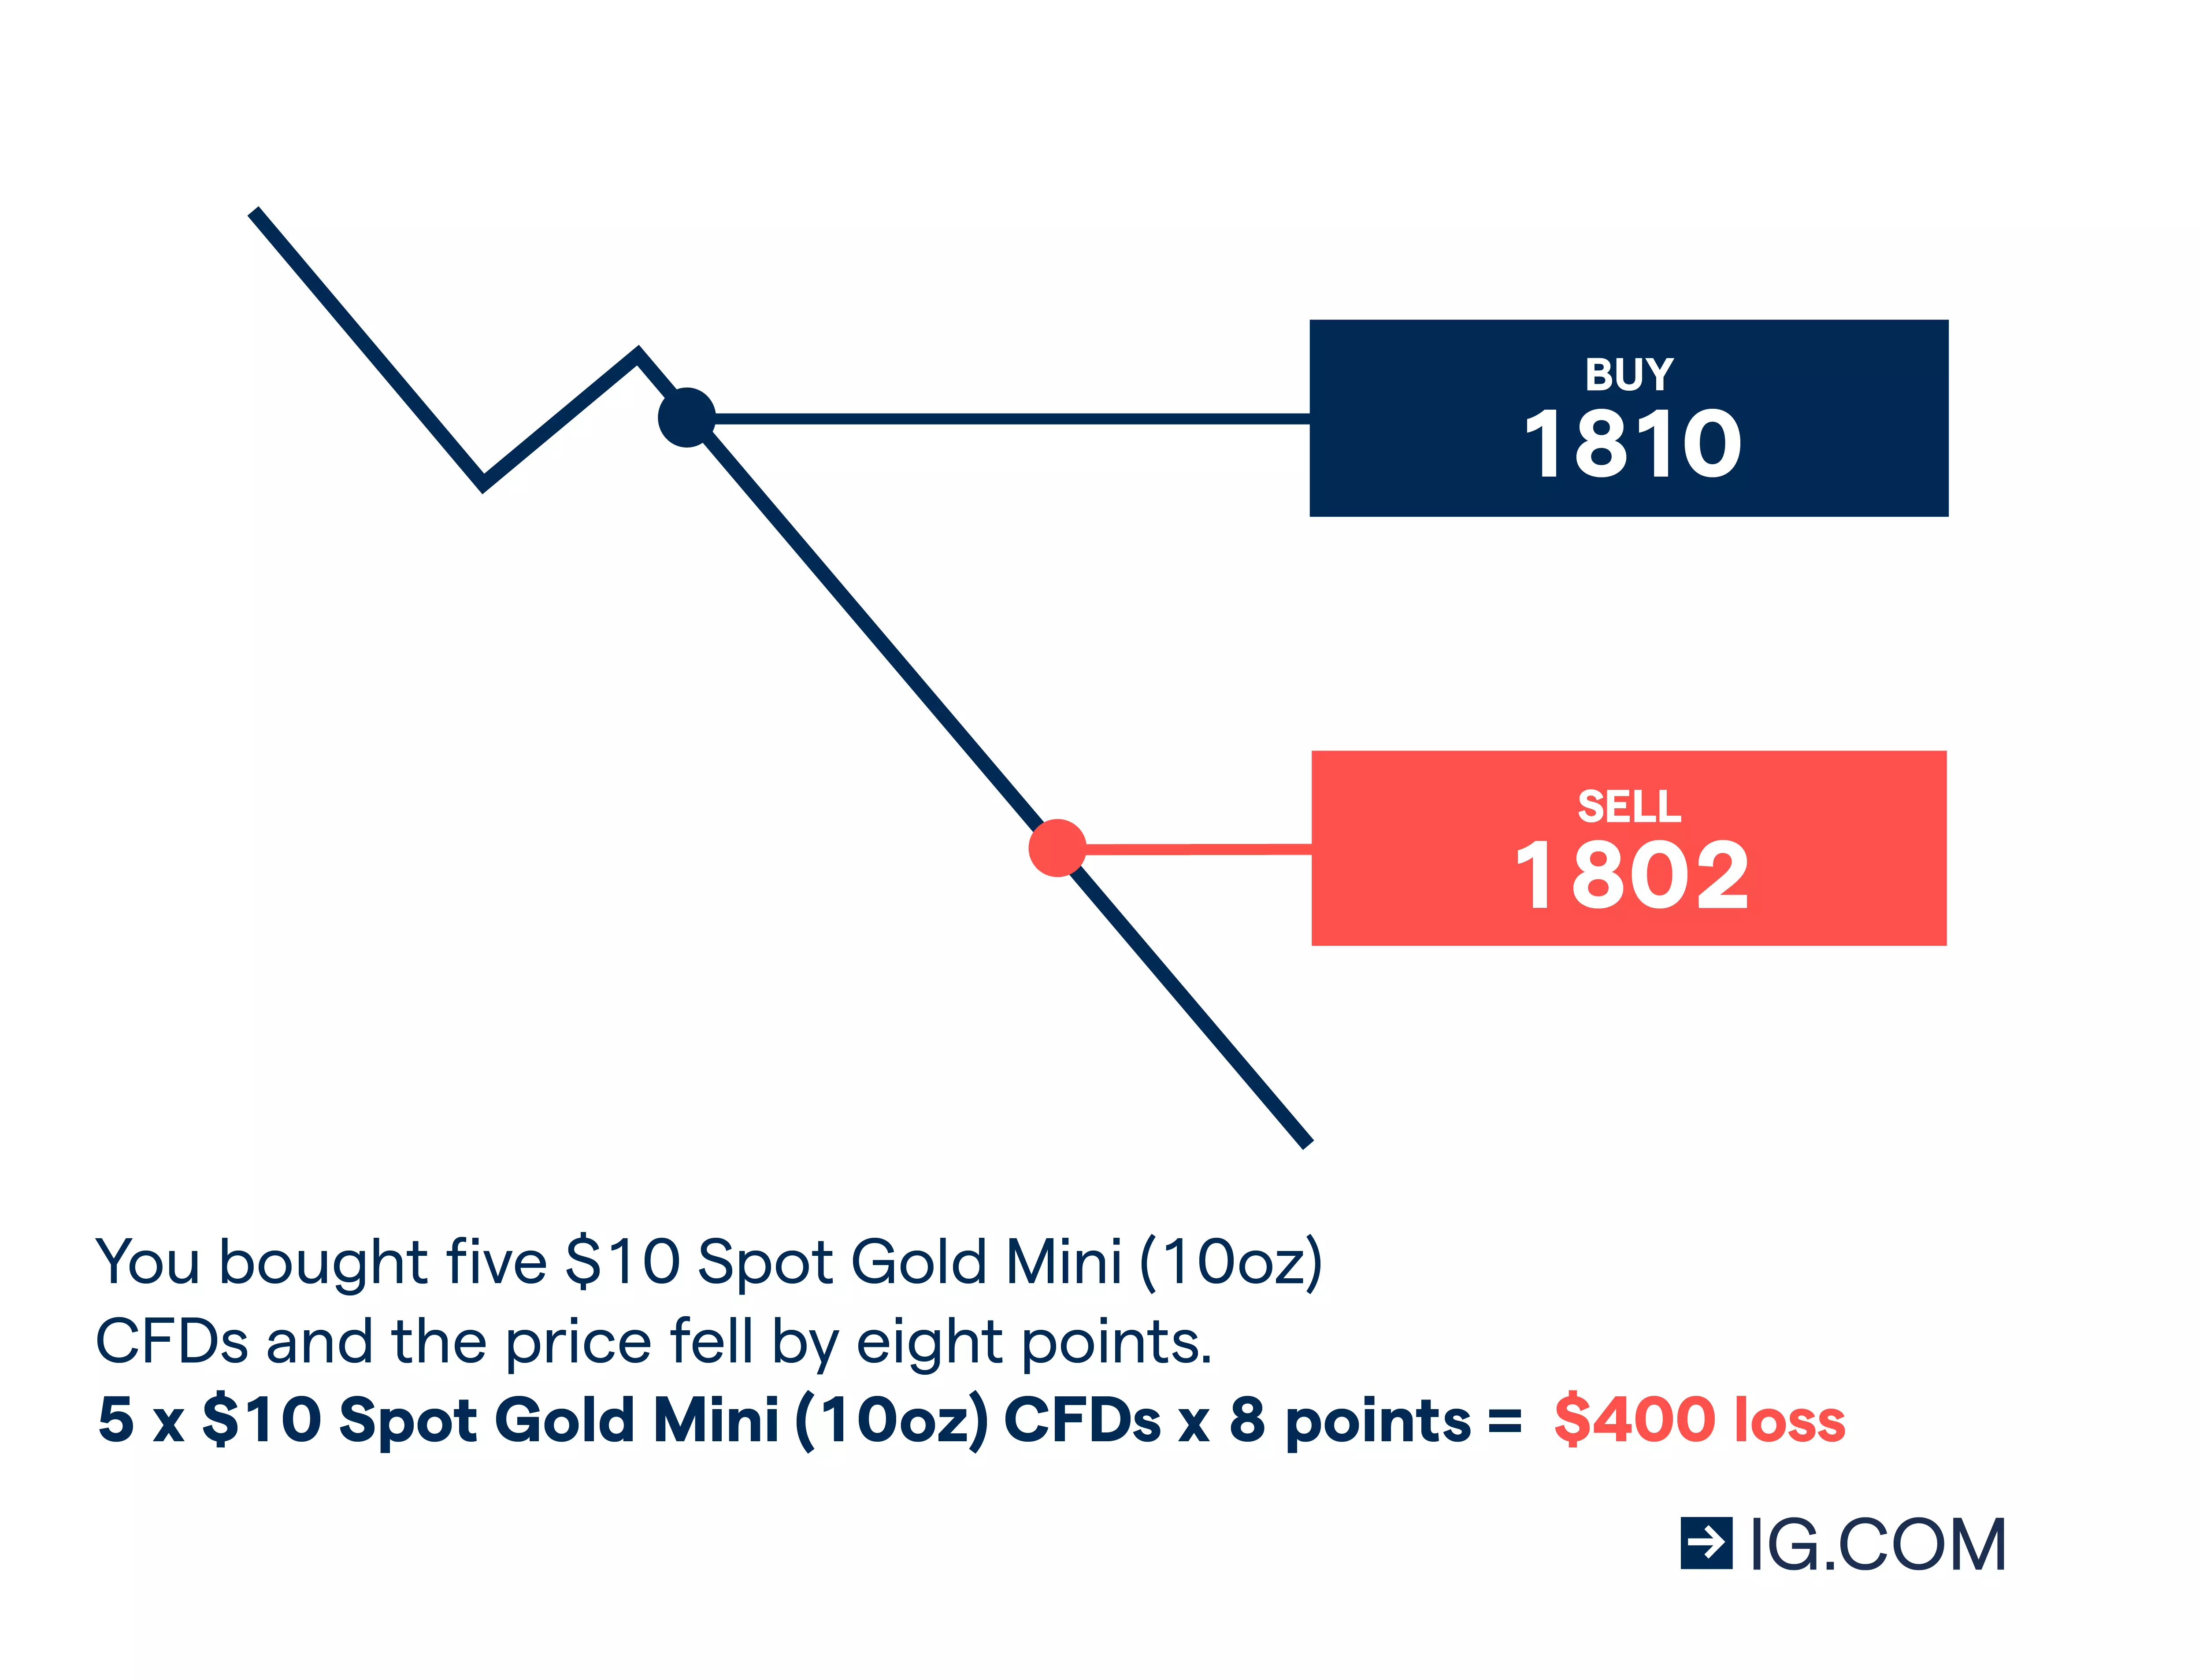 Spot gold CFD trade loss example